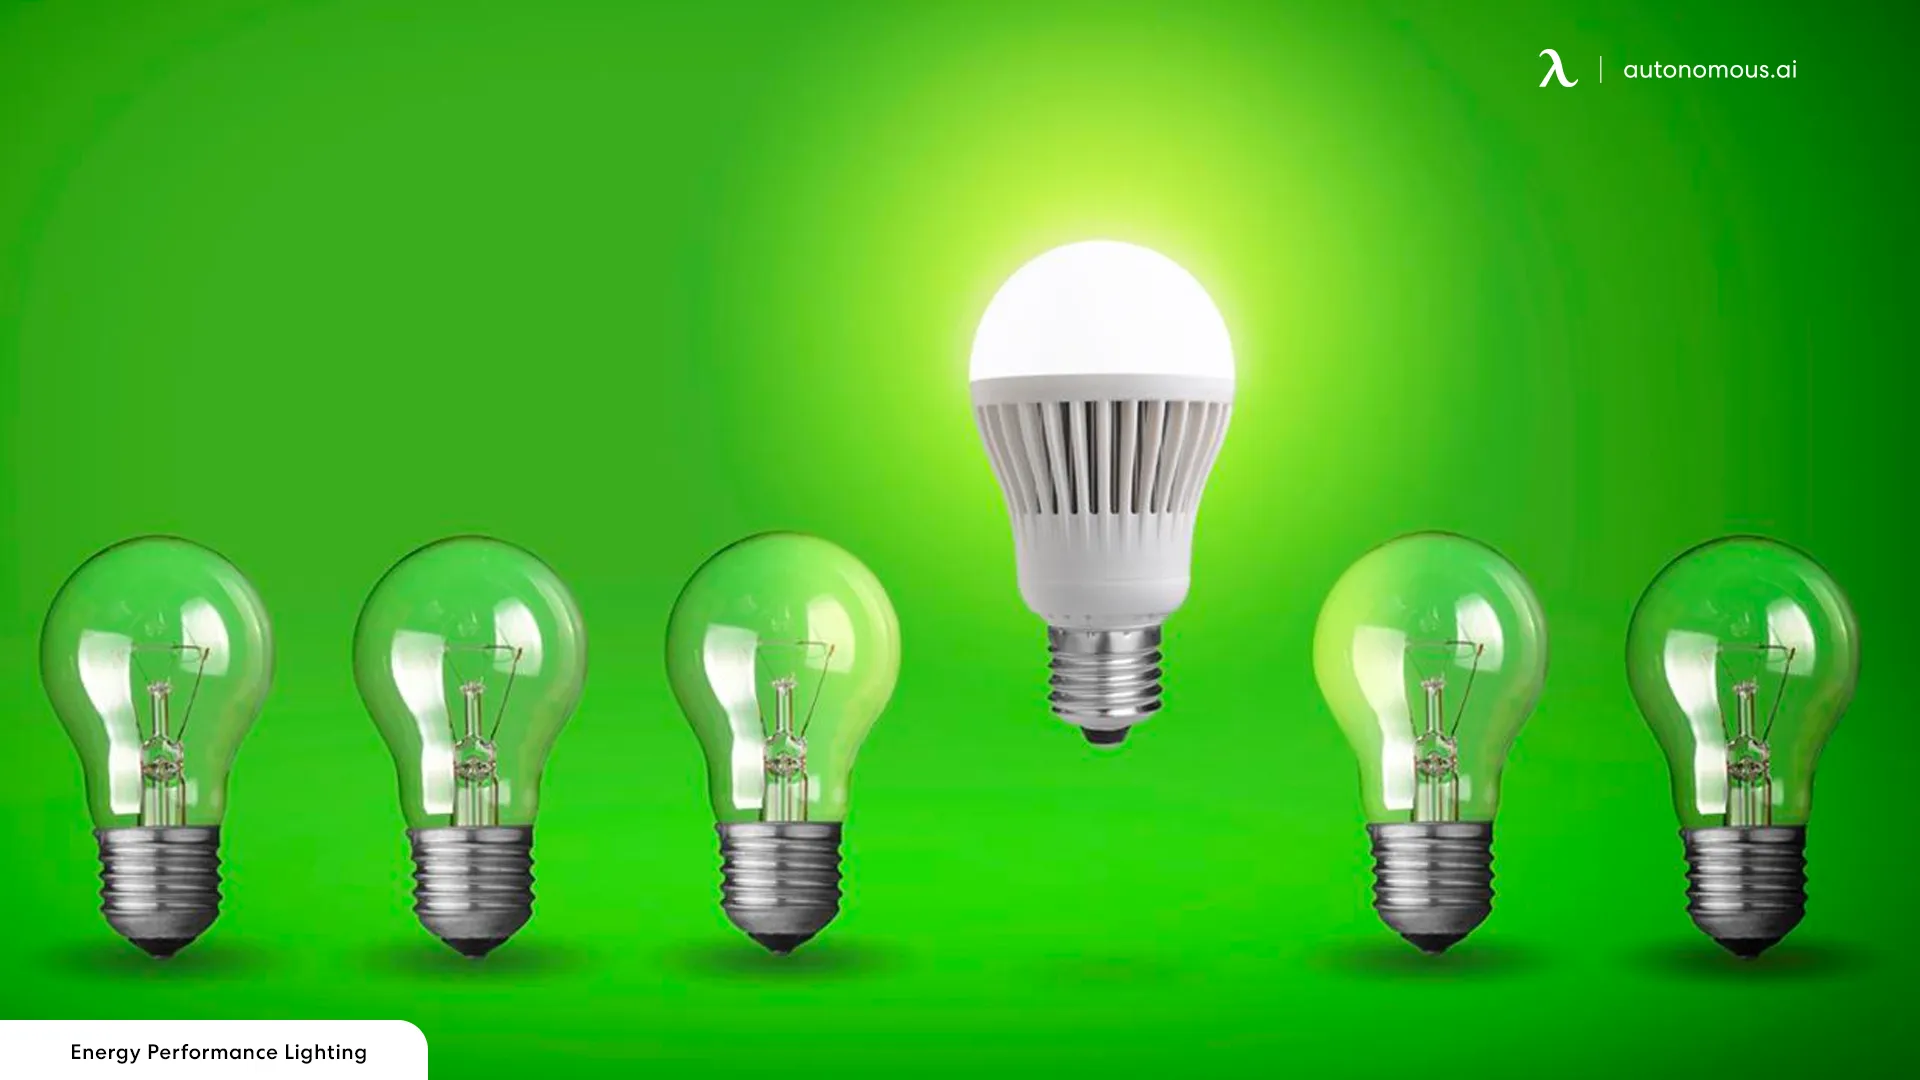 Opt for Energy-Efficient Lighting